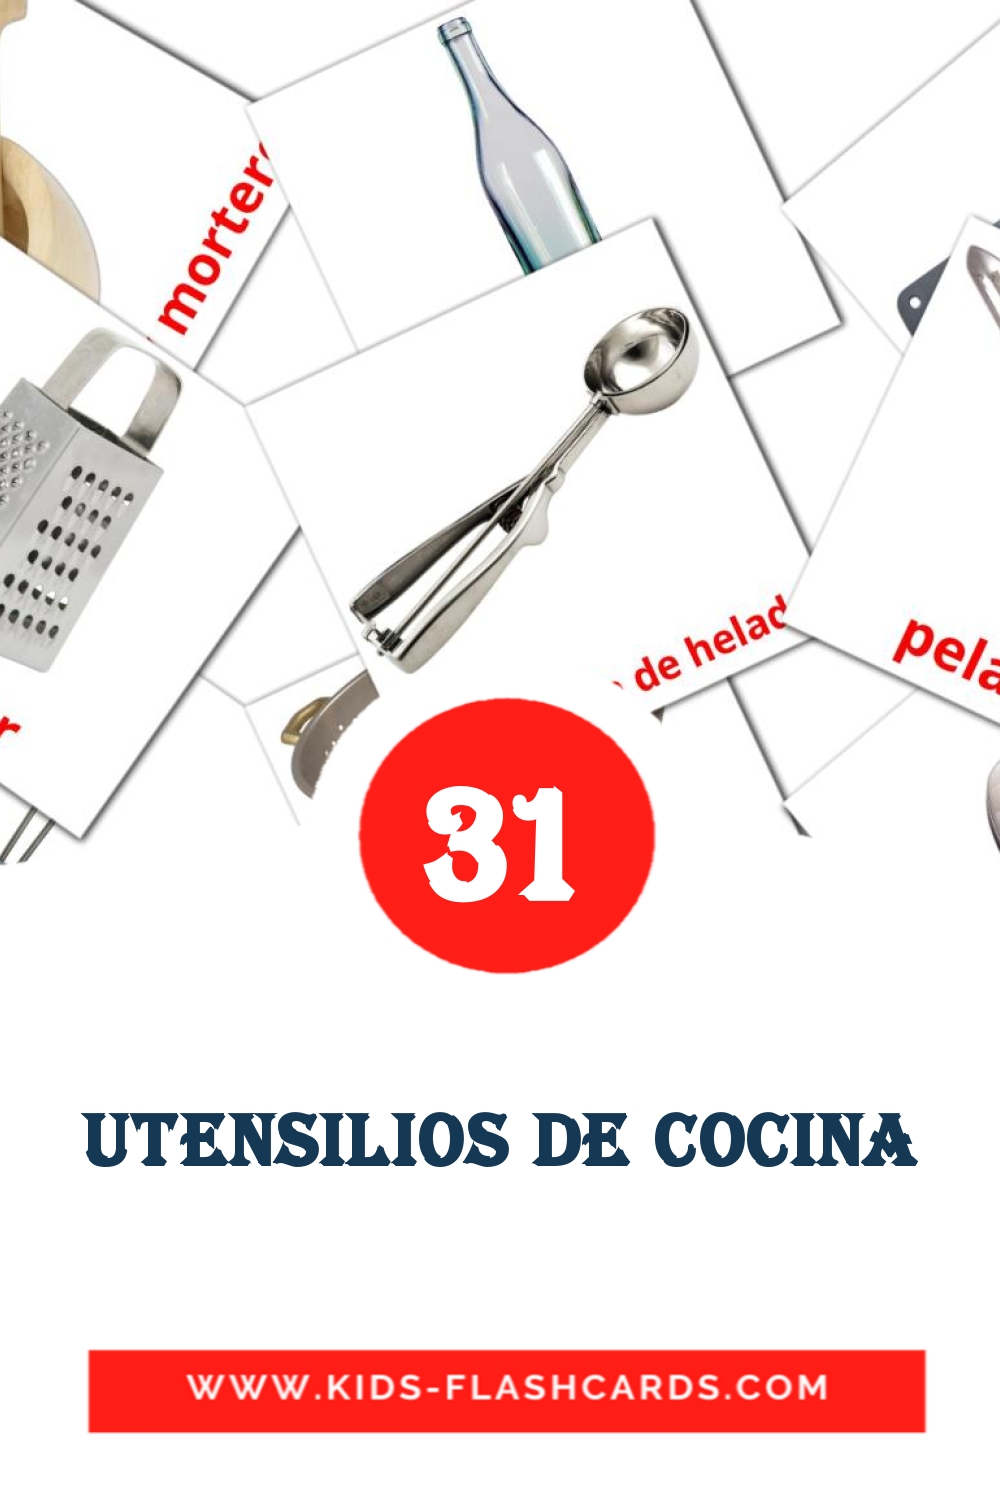 35 Utensilios de cocina Picture Cards for Kindergarden in spanish